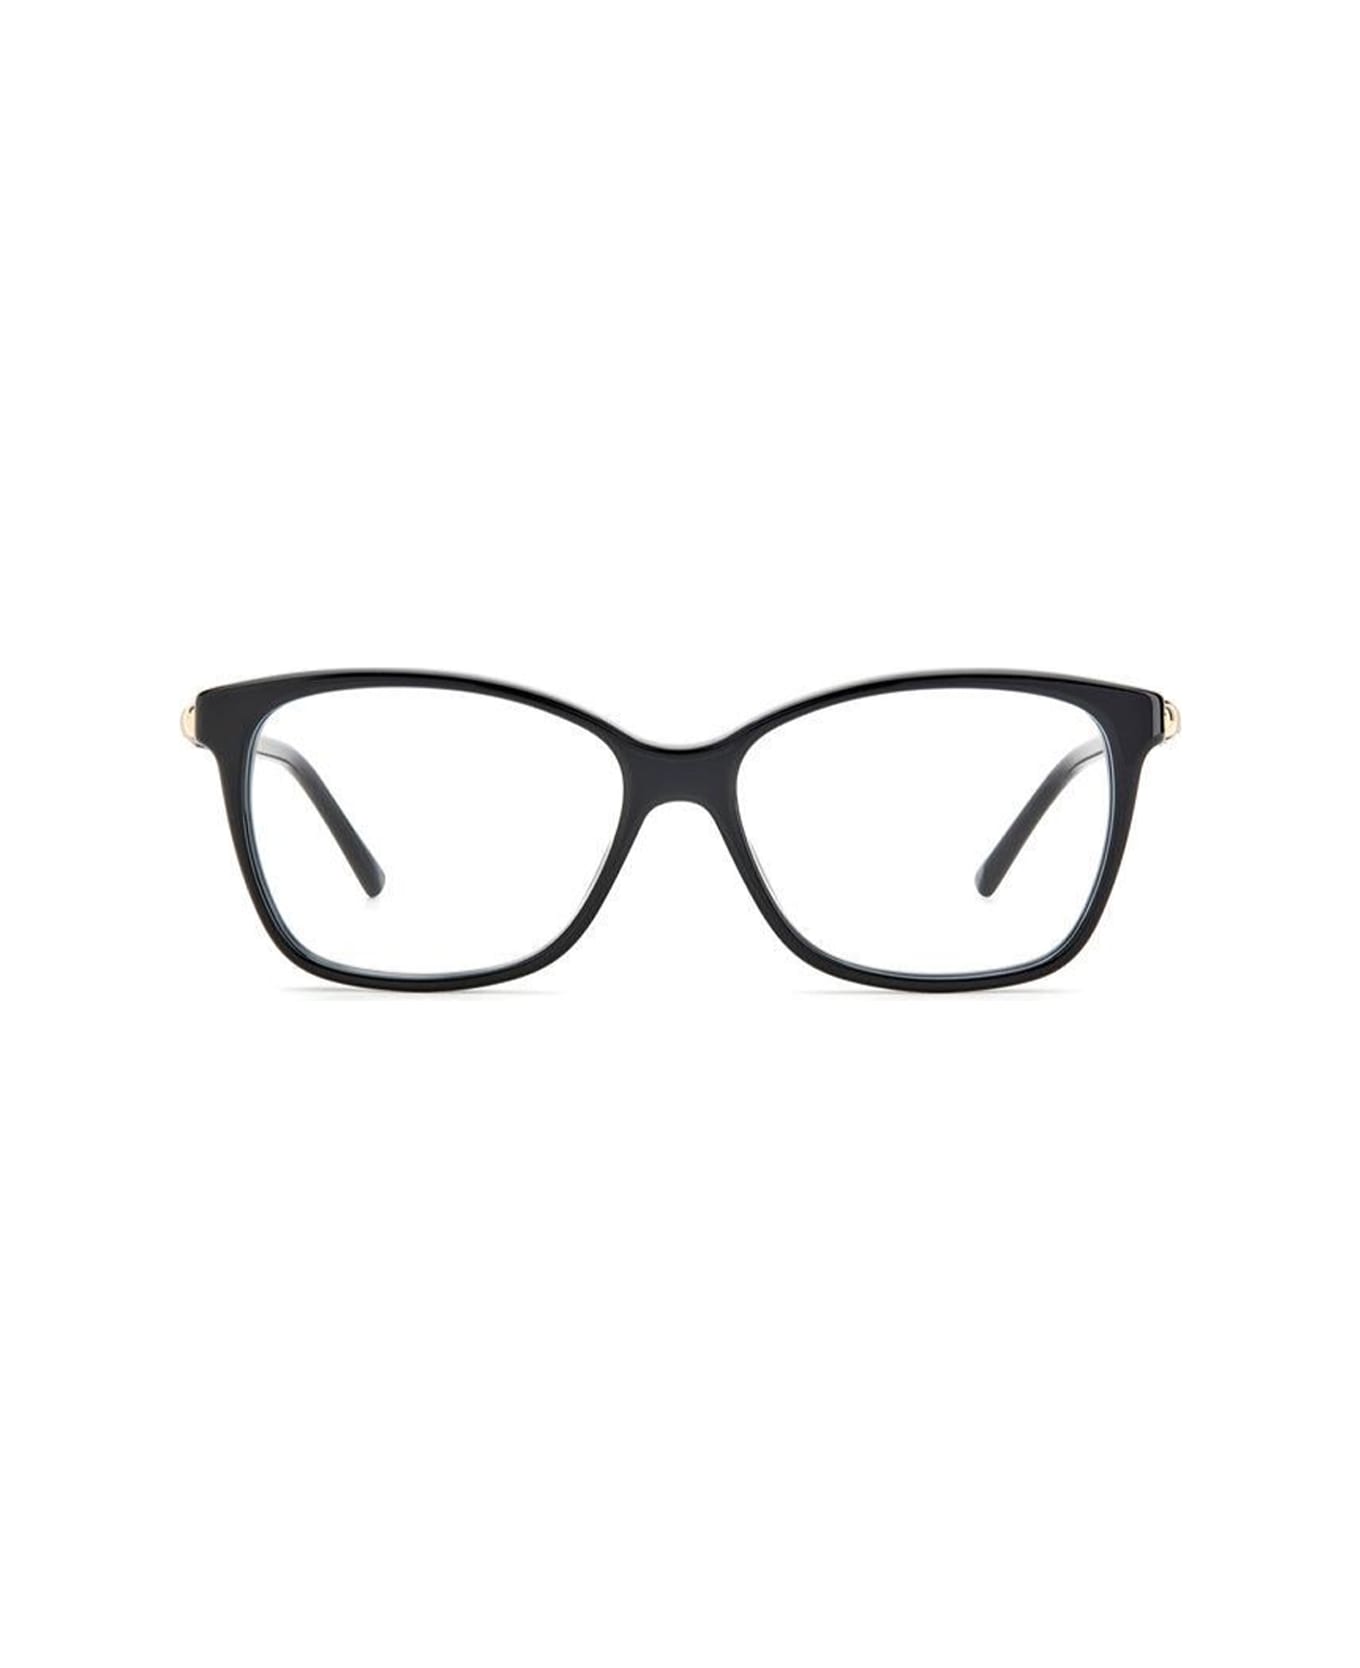 Jimmy Choo Eyewear Jc292 807 Glasses - Nero